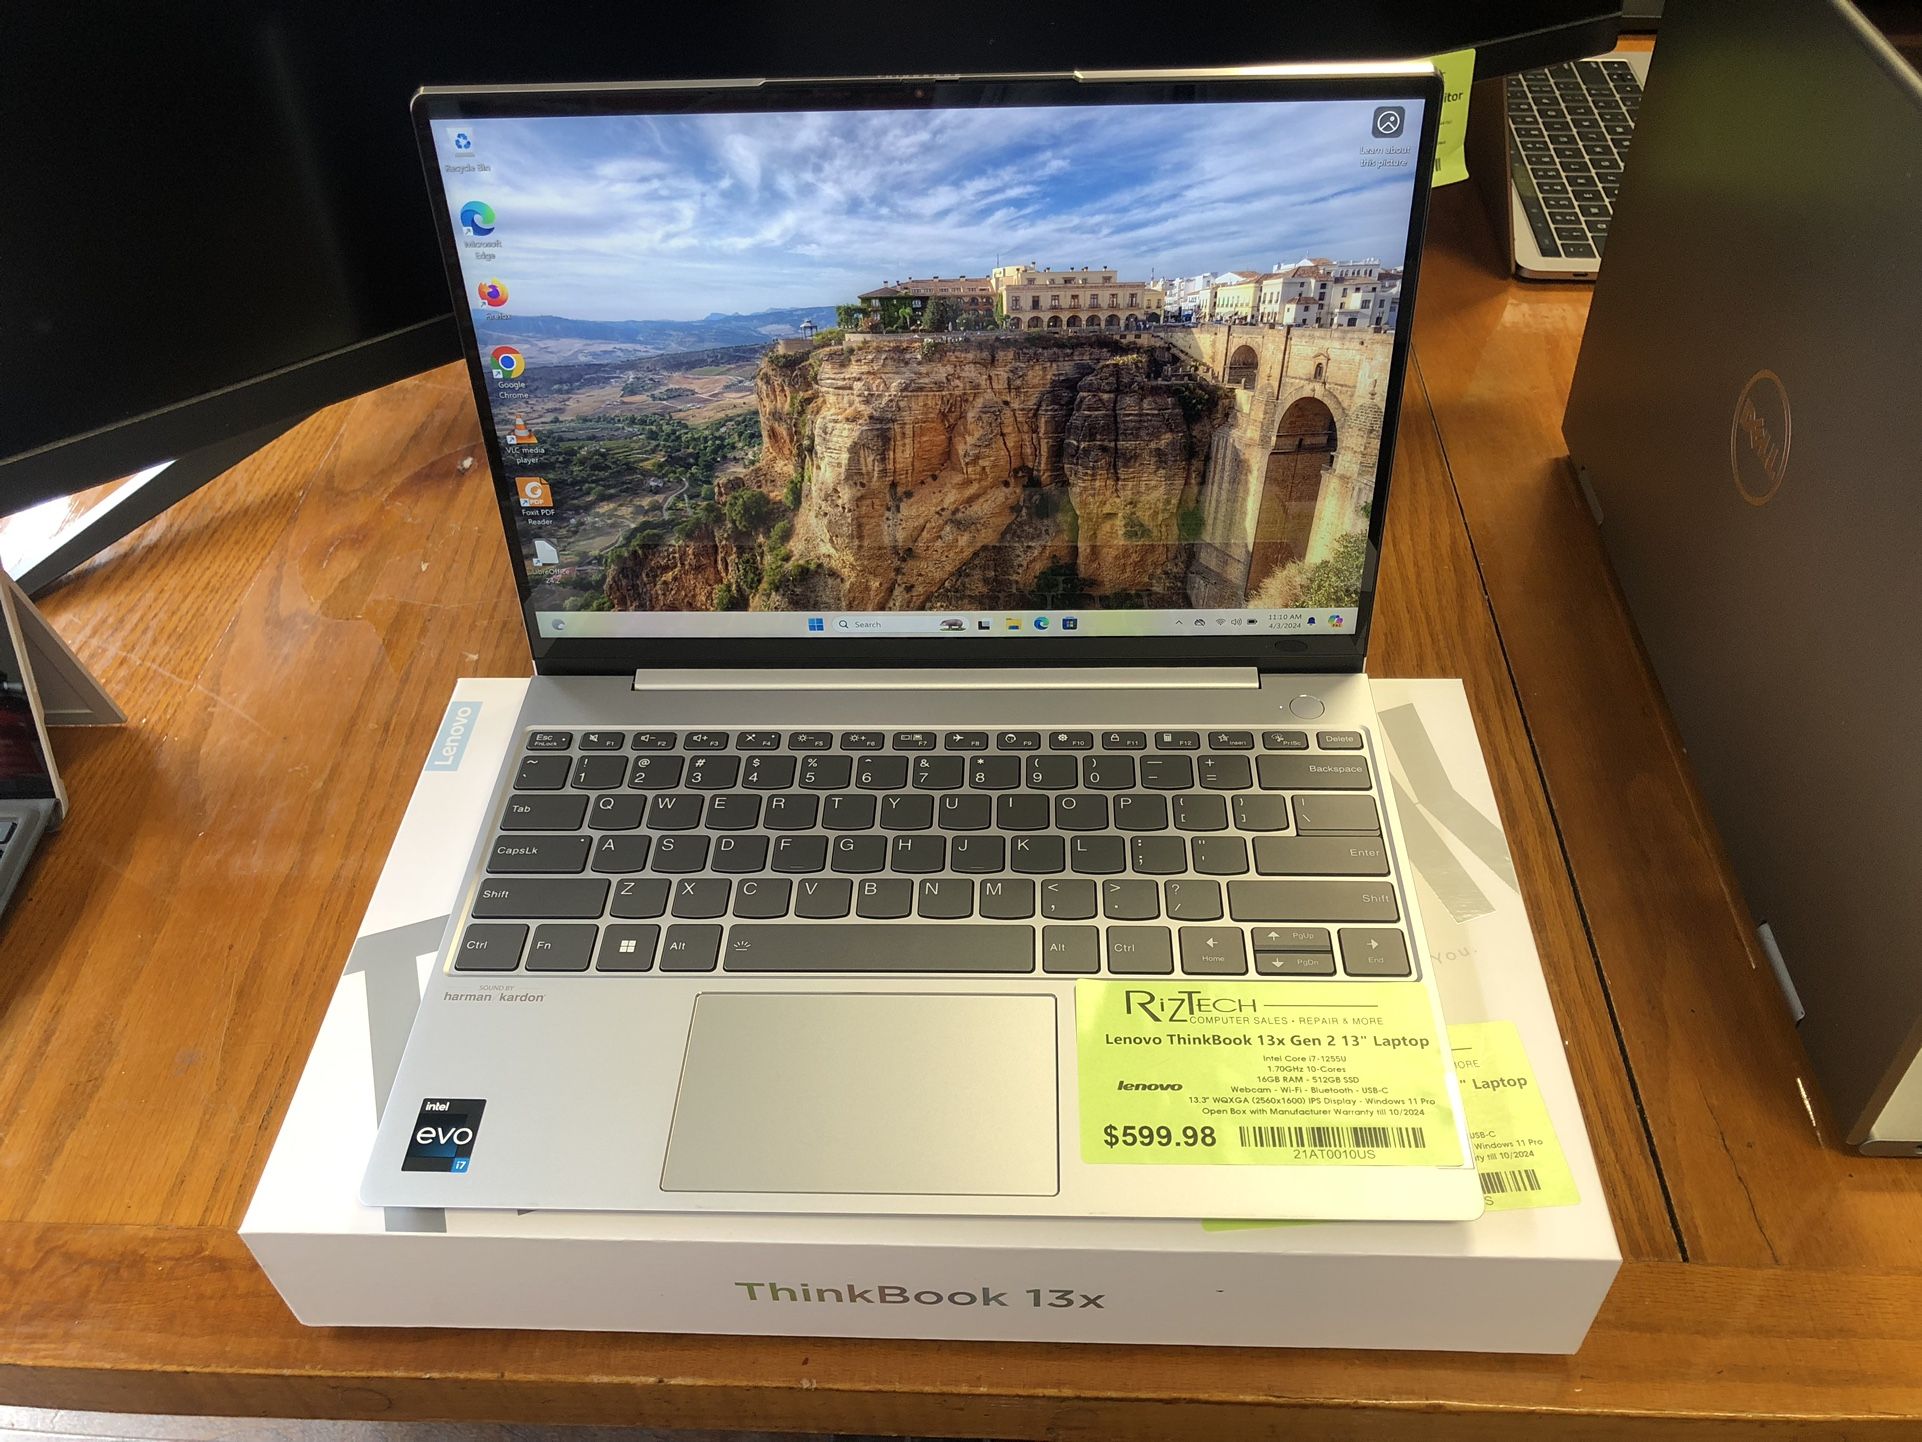 Lenovo ThinkBook 13x Gen 2 13" Laptop